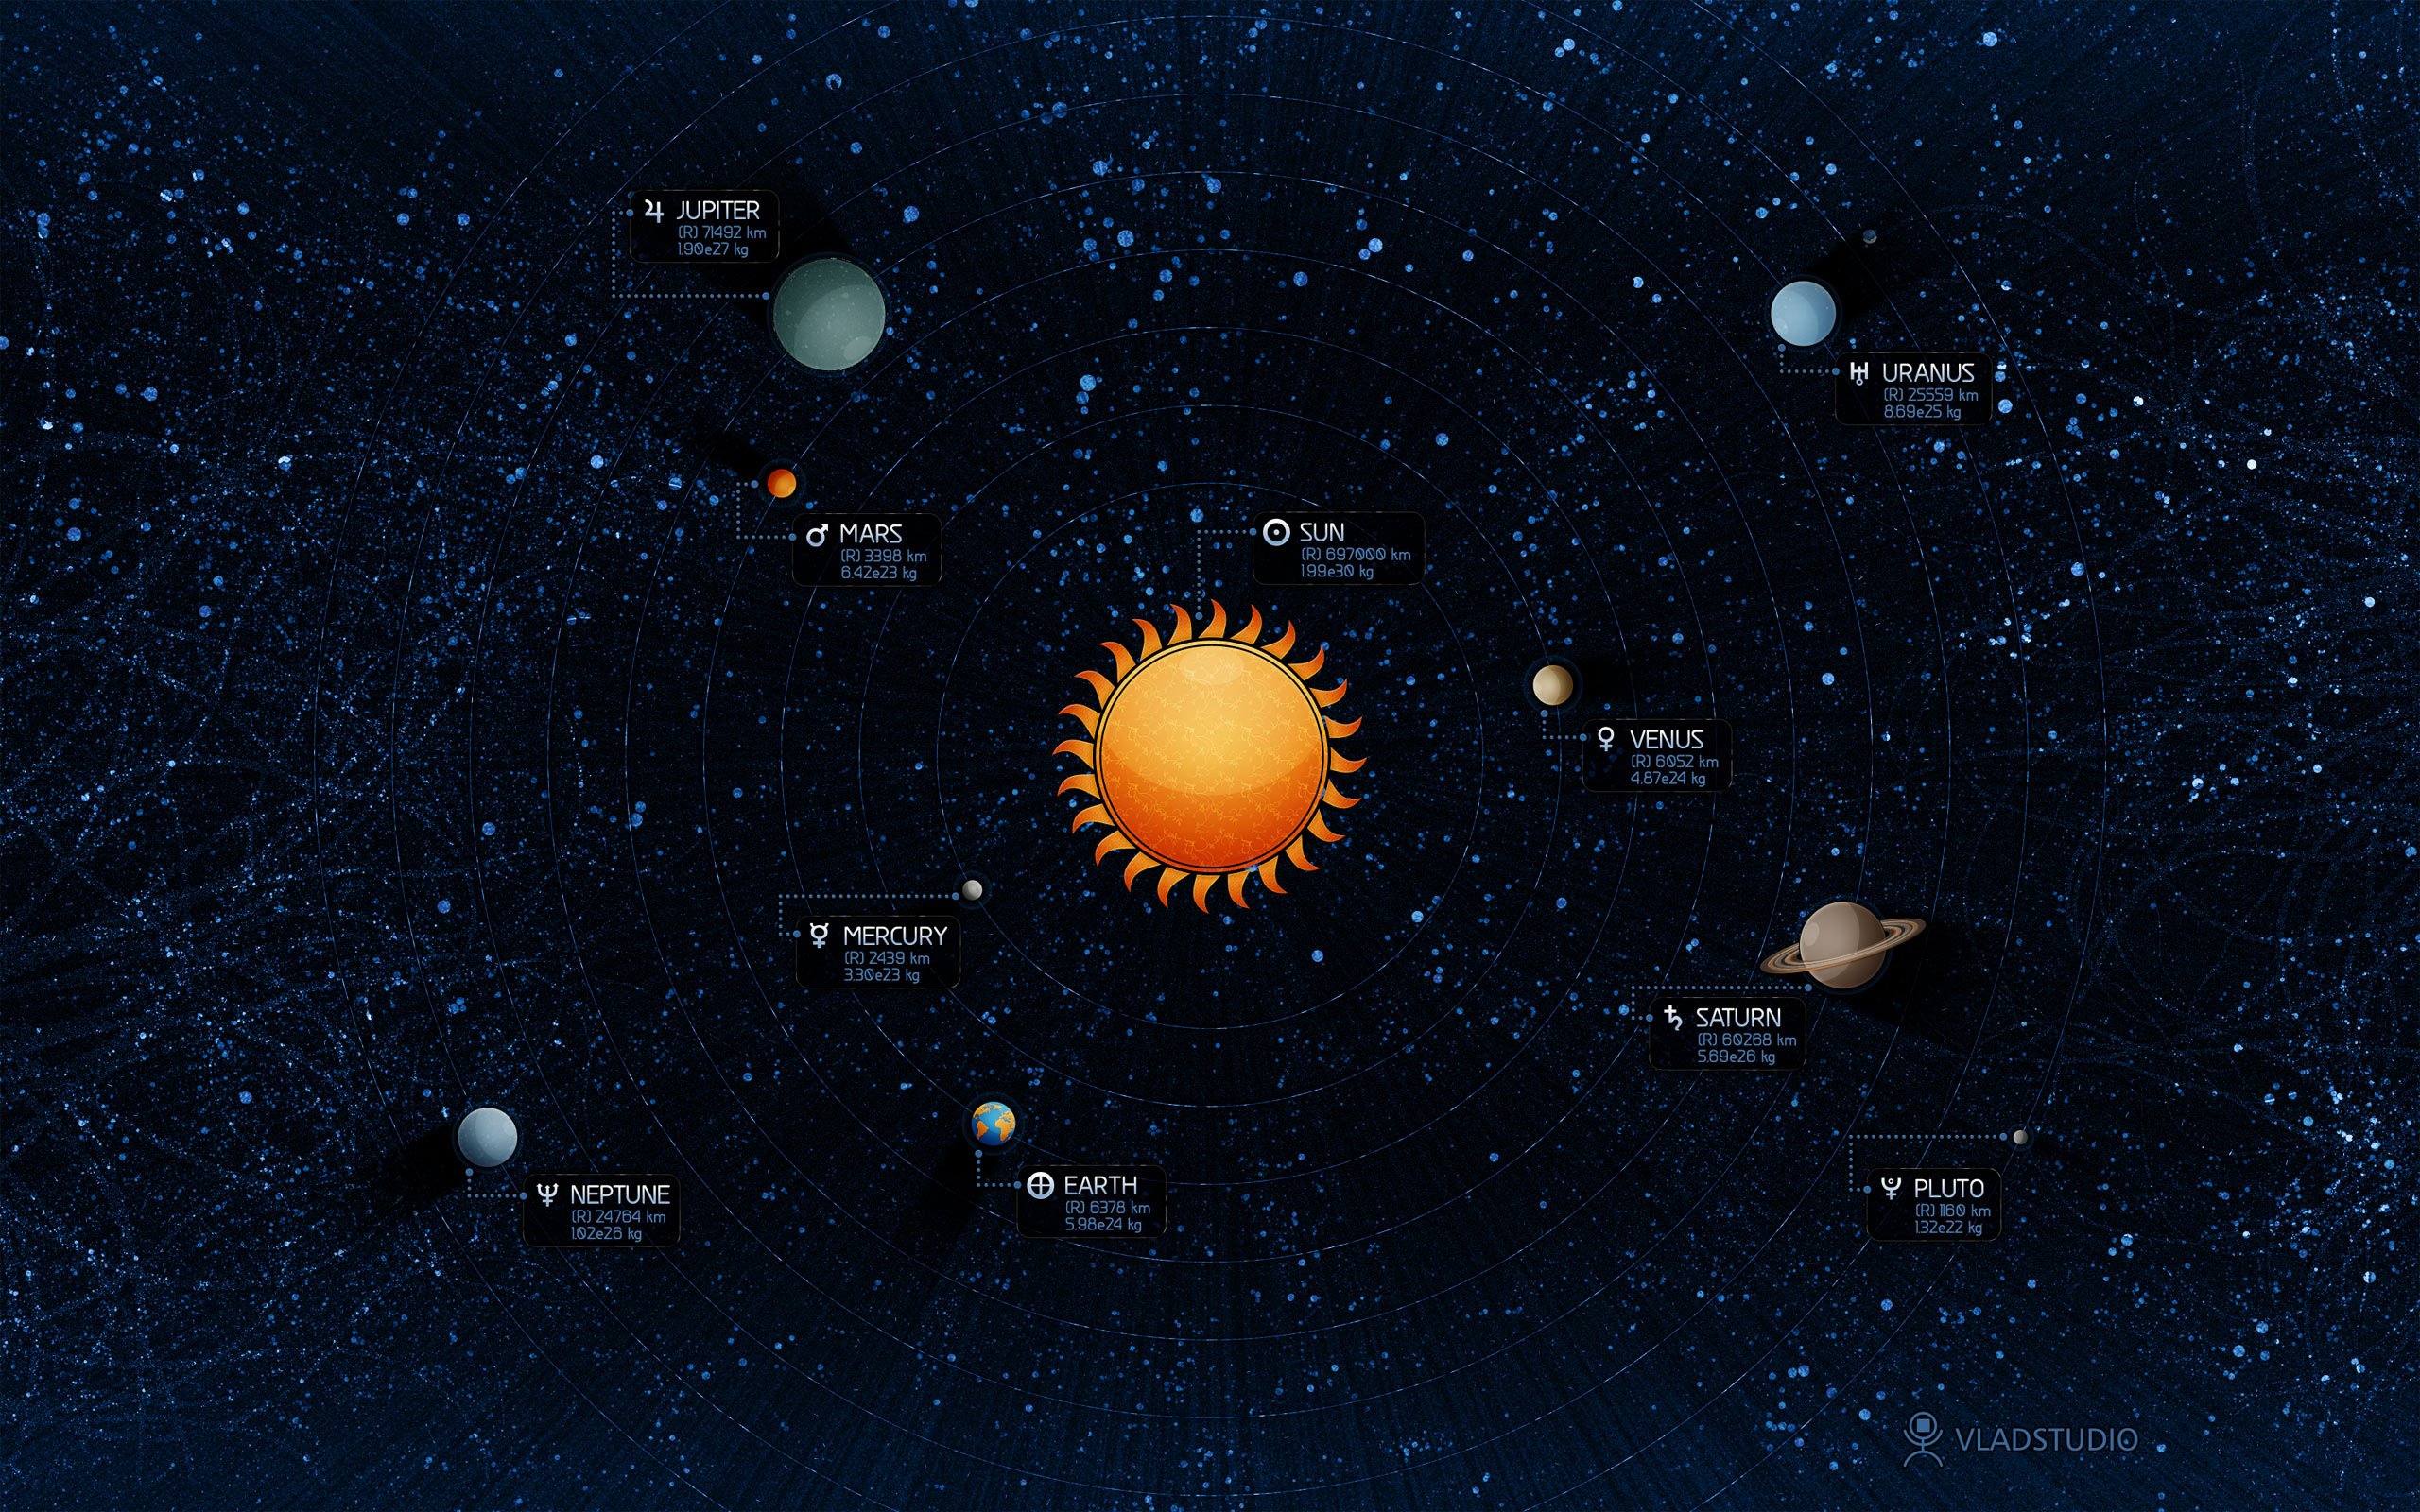 Wallpaper Solar system, Planets, Earth, Mercury, Venus, Mars